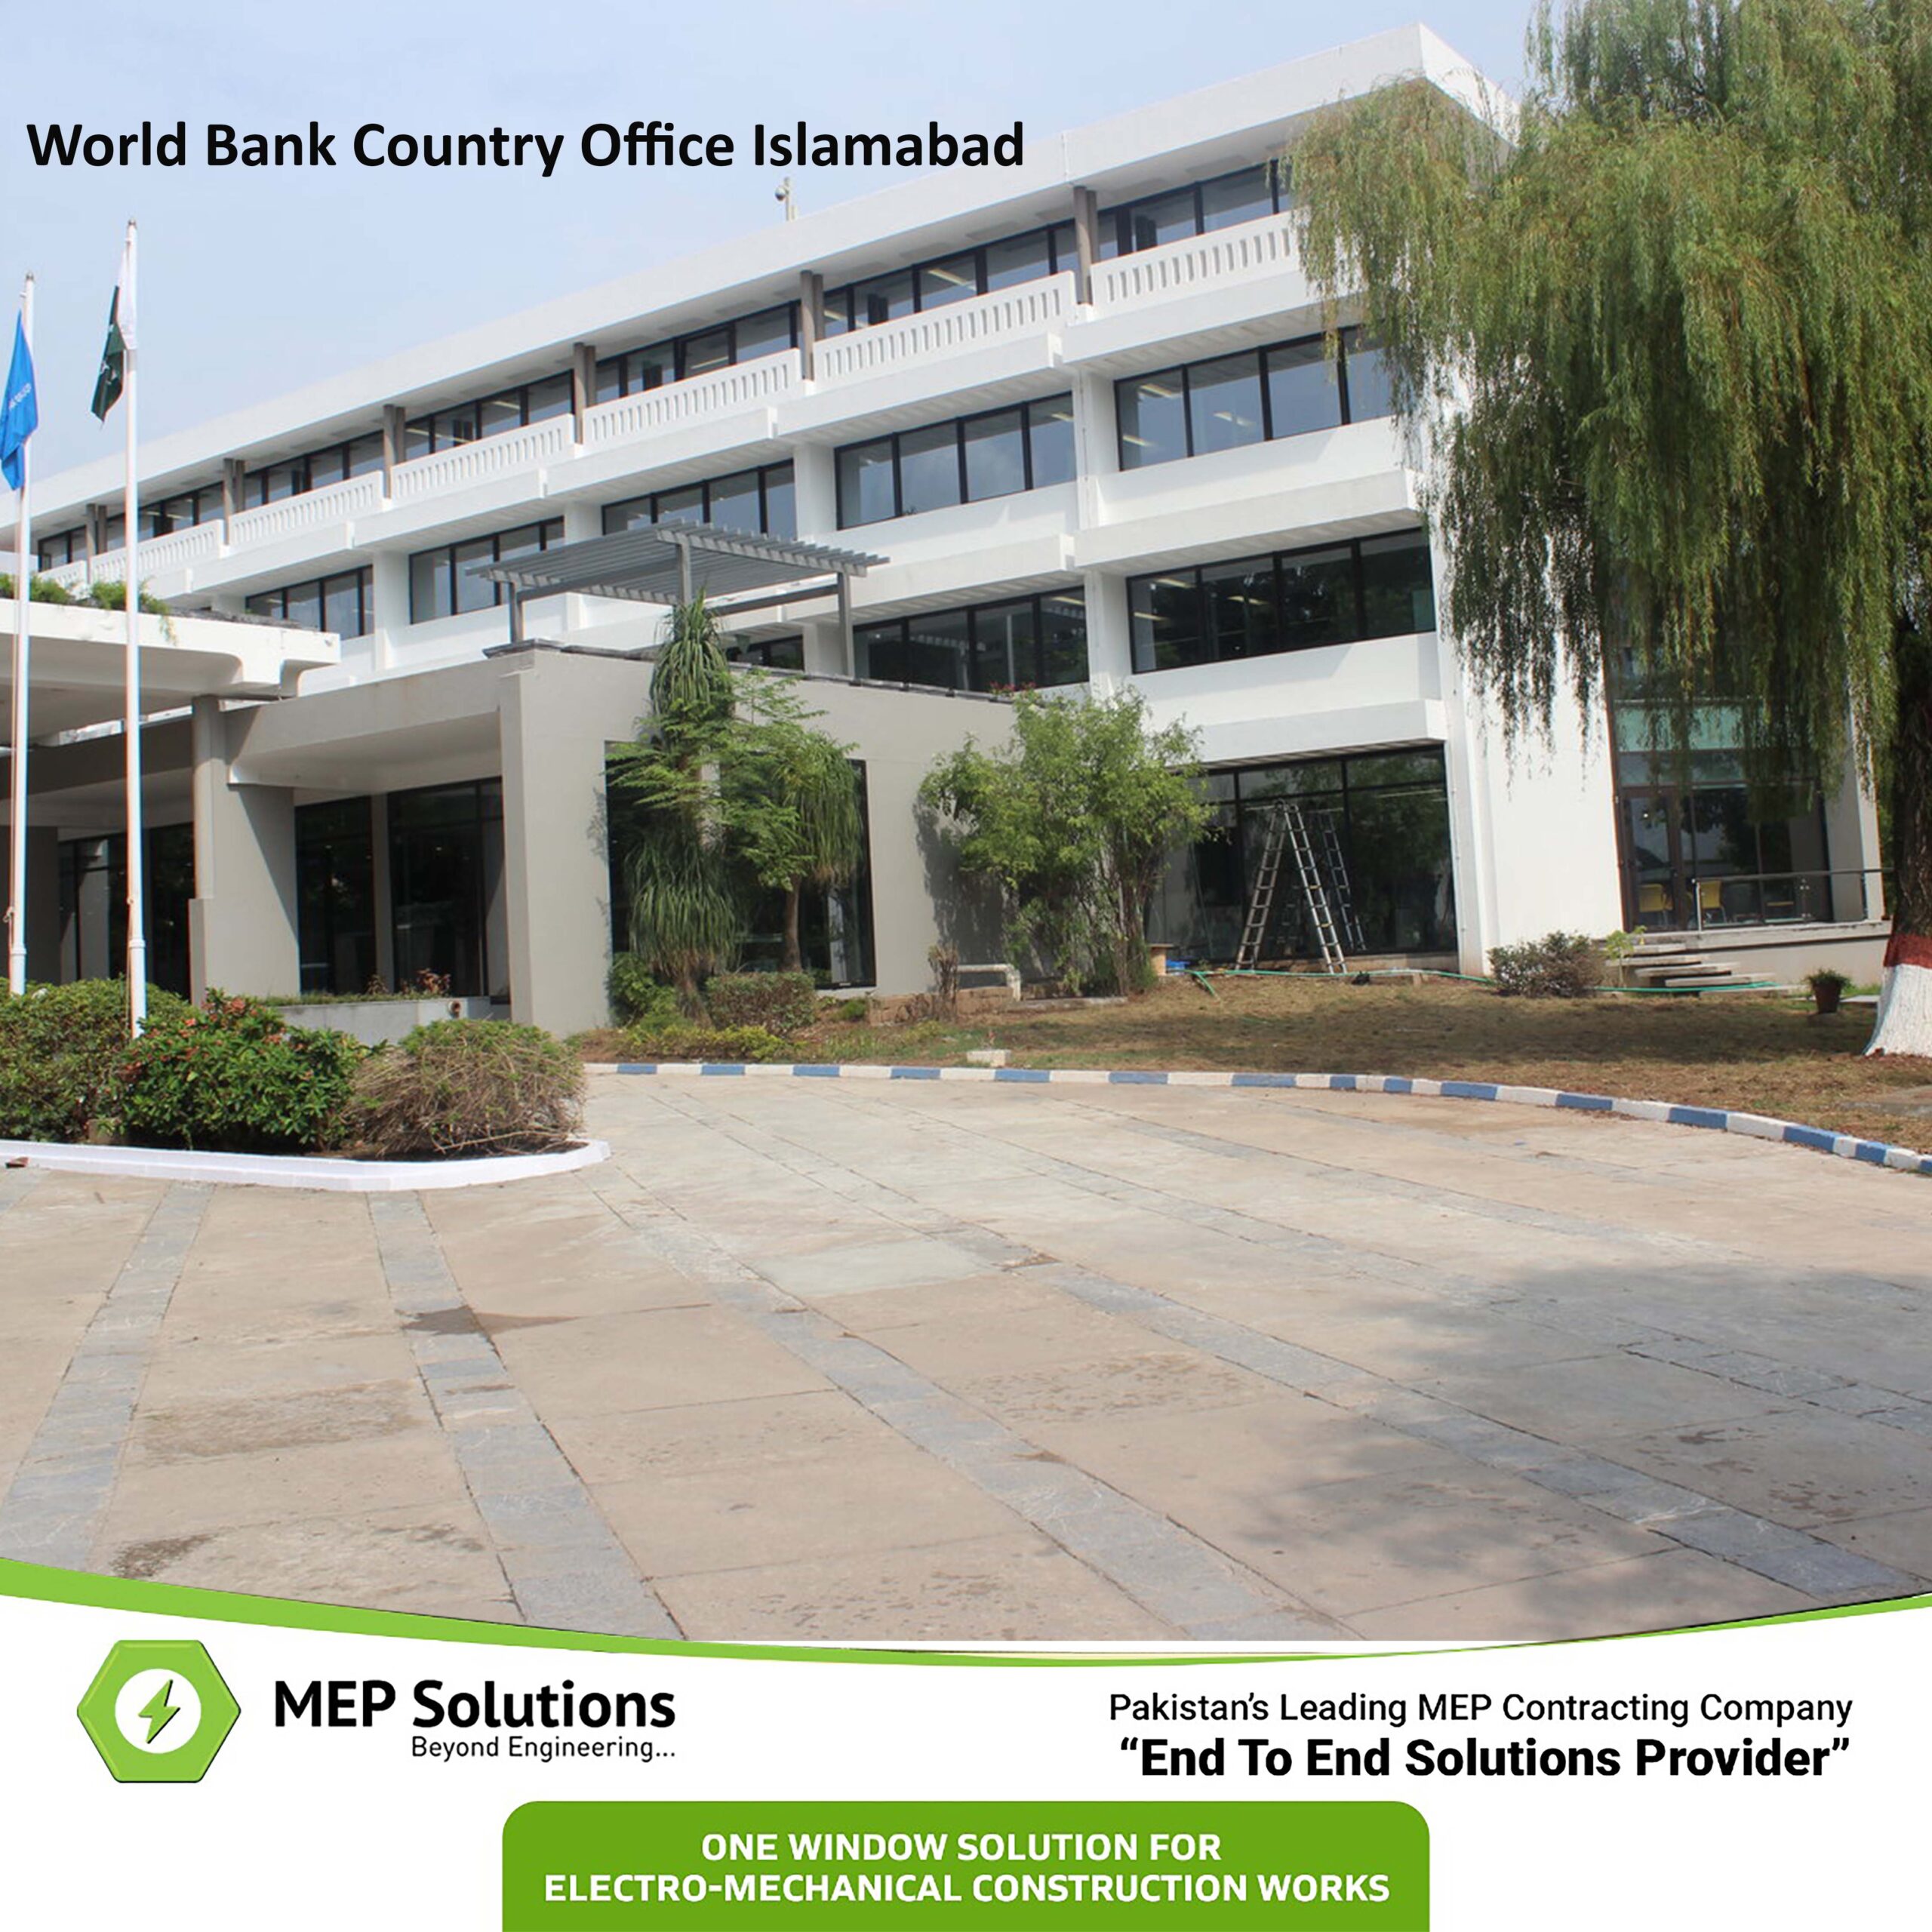 WORLD BANK OFFICE ISLAMABAD